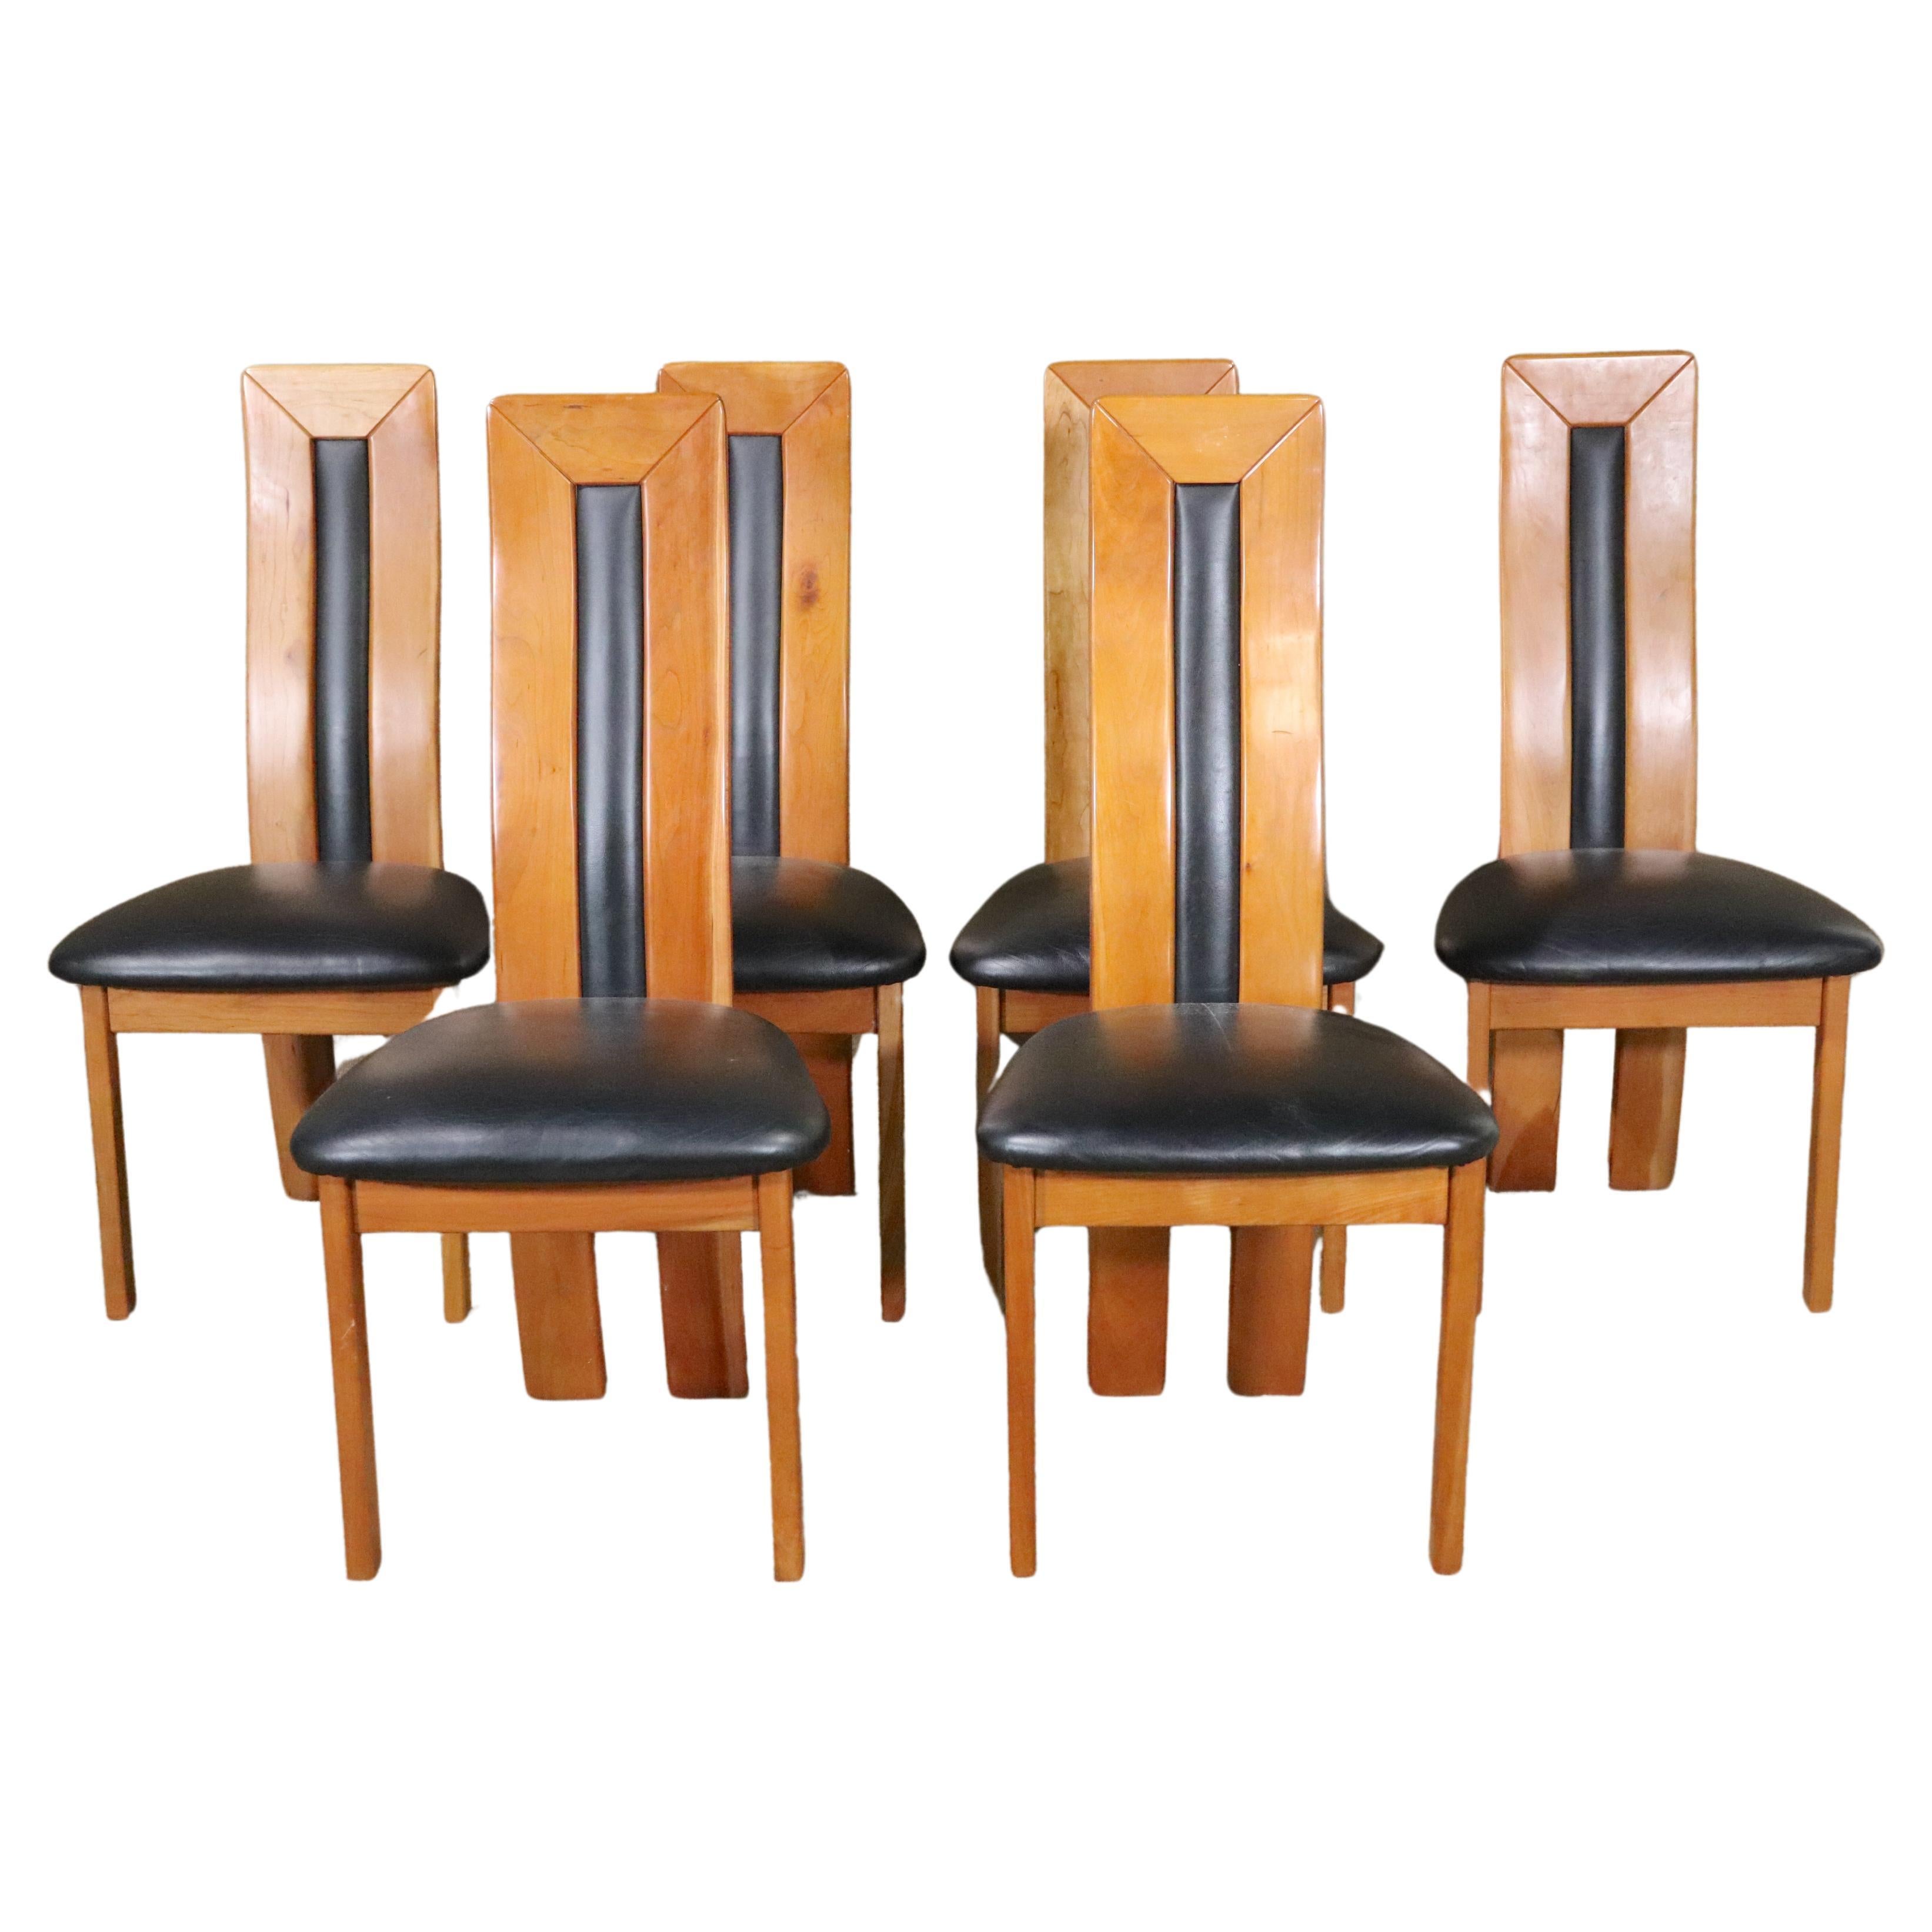 Six Modern Dining Chairs